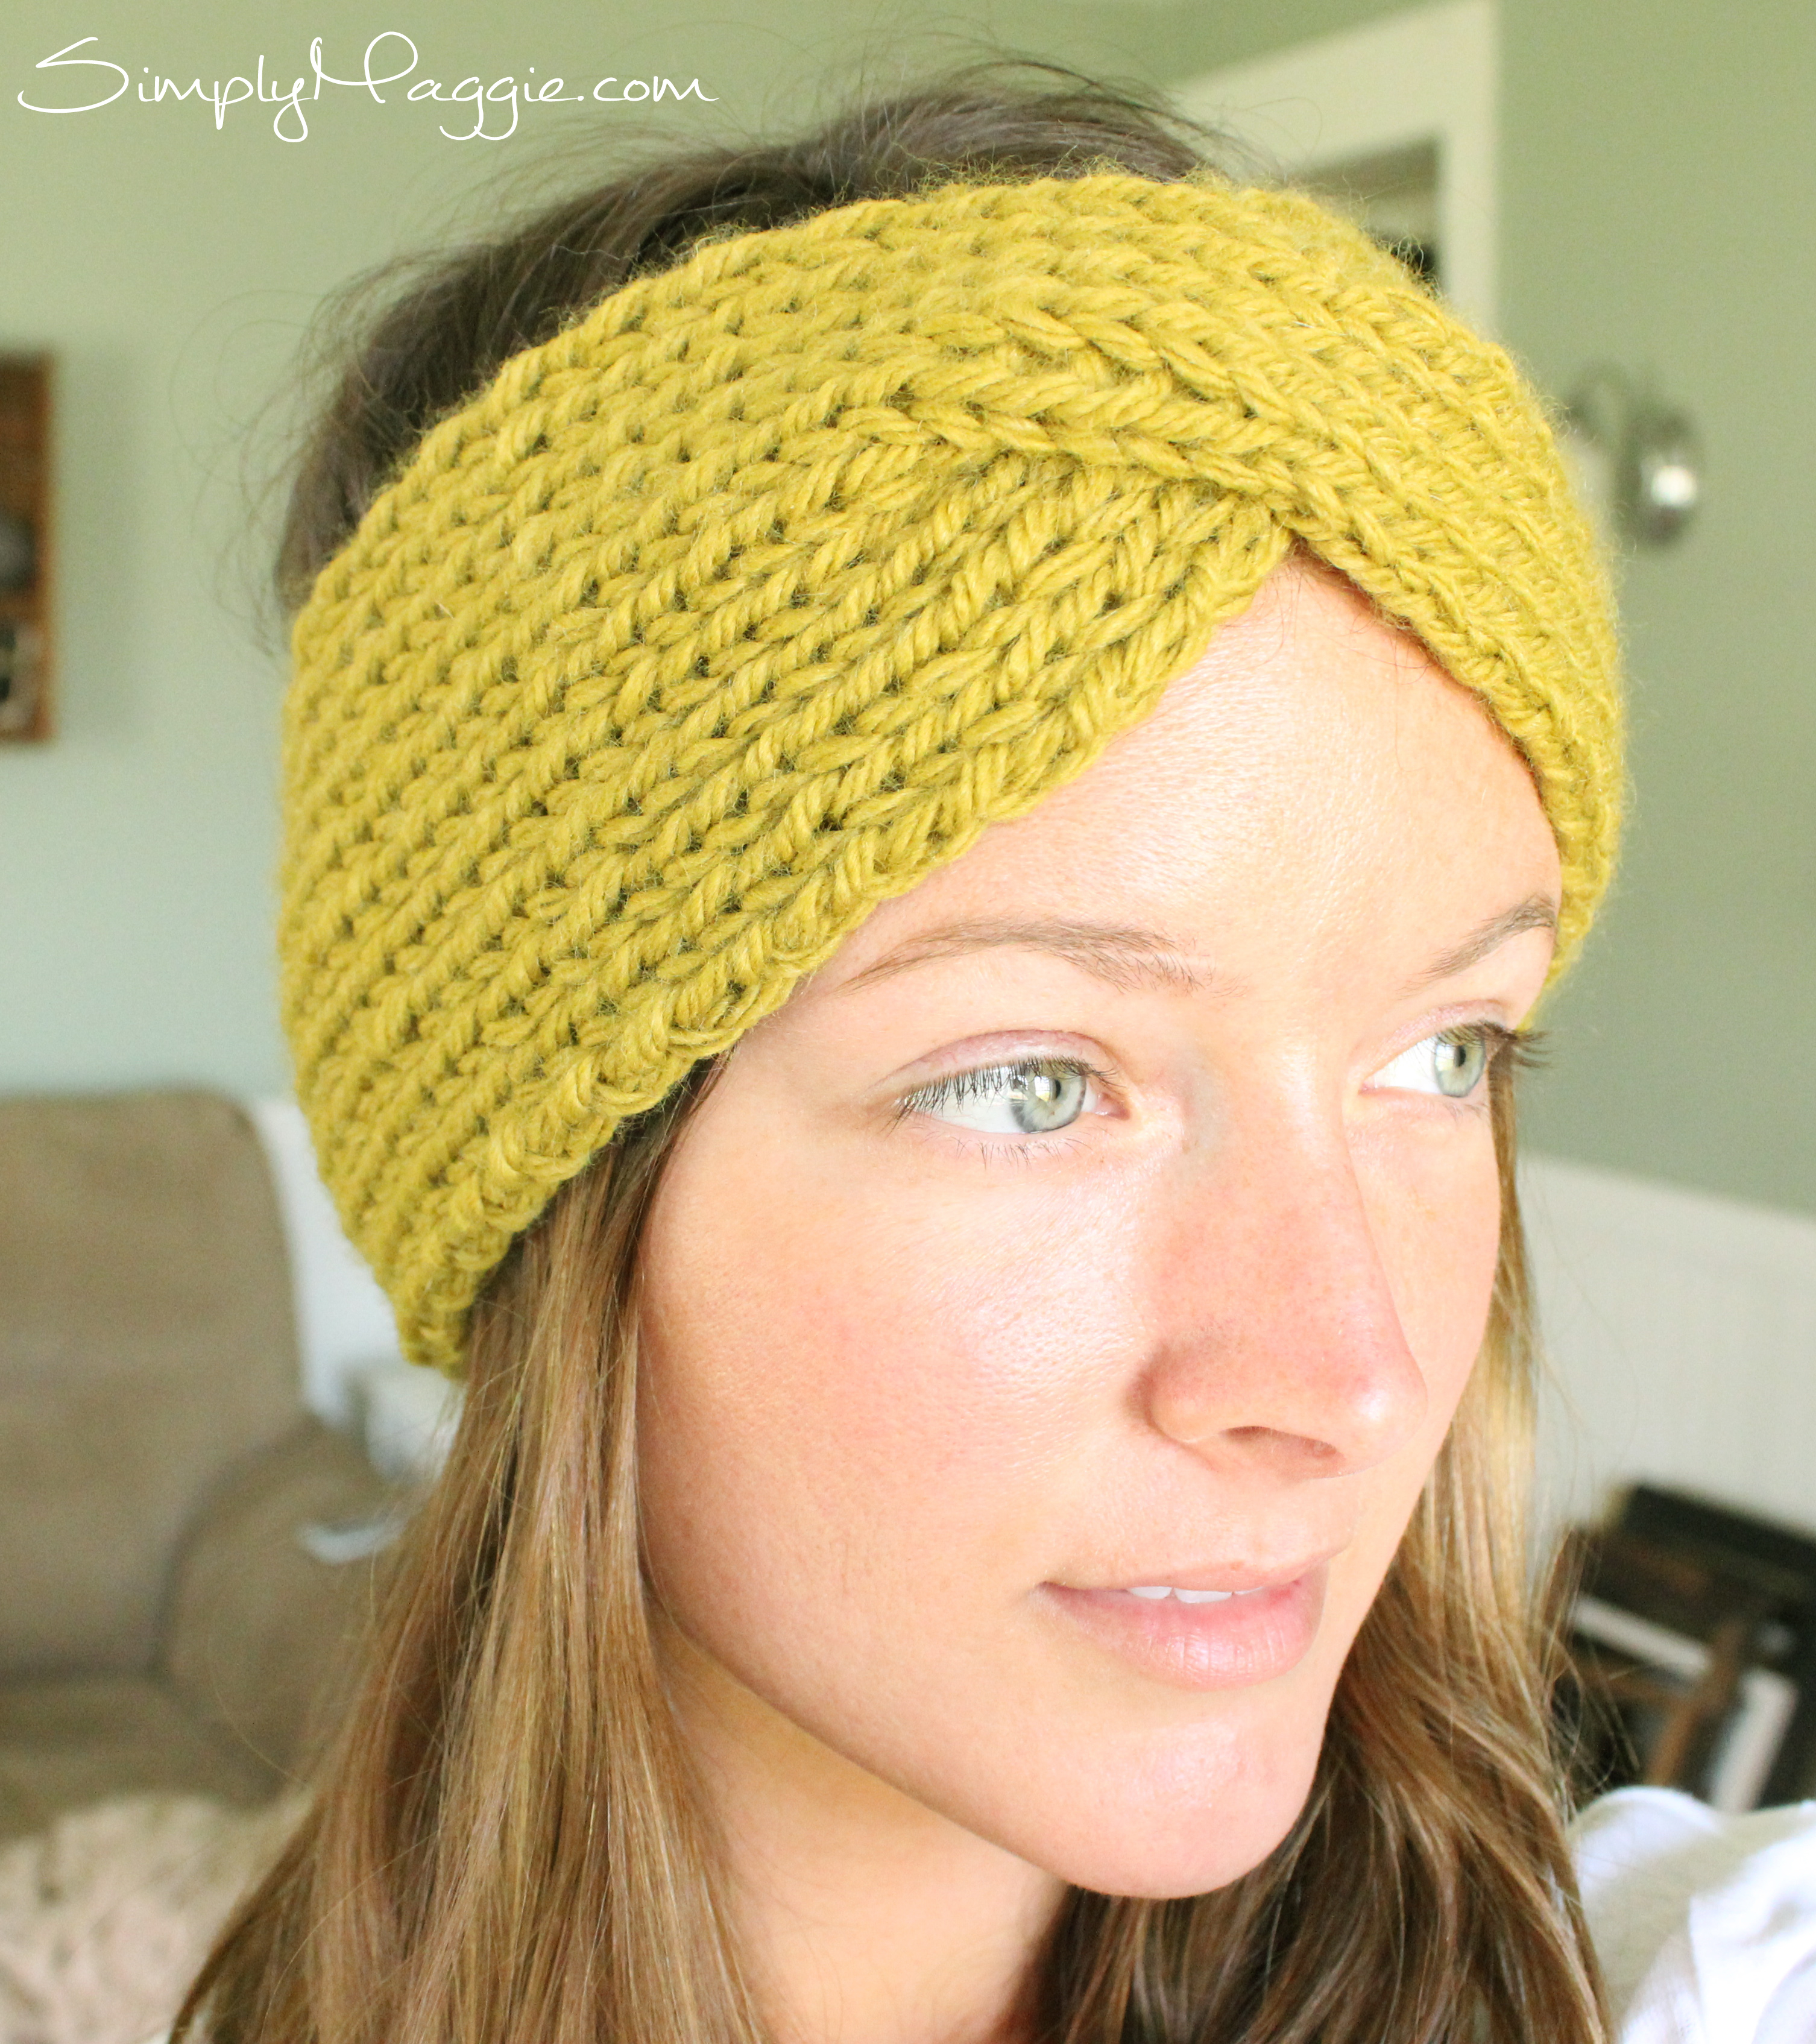 Knit Headband Pattern With Flower Turban Style Knit Headband Simplymaggie